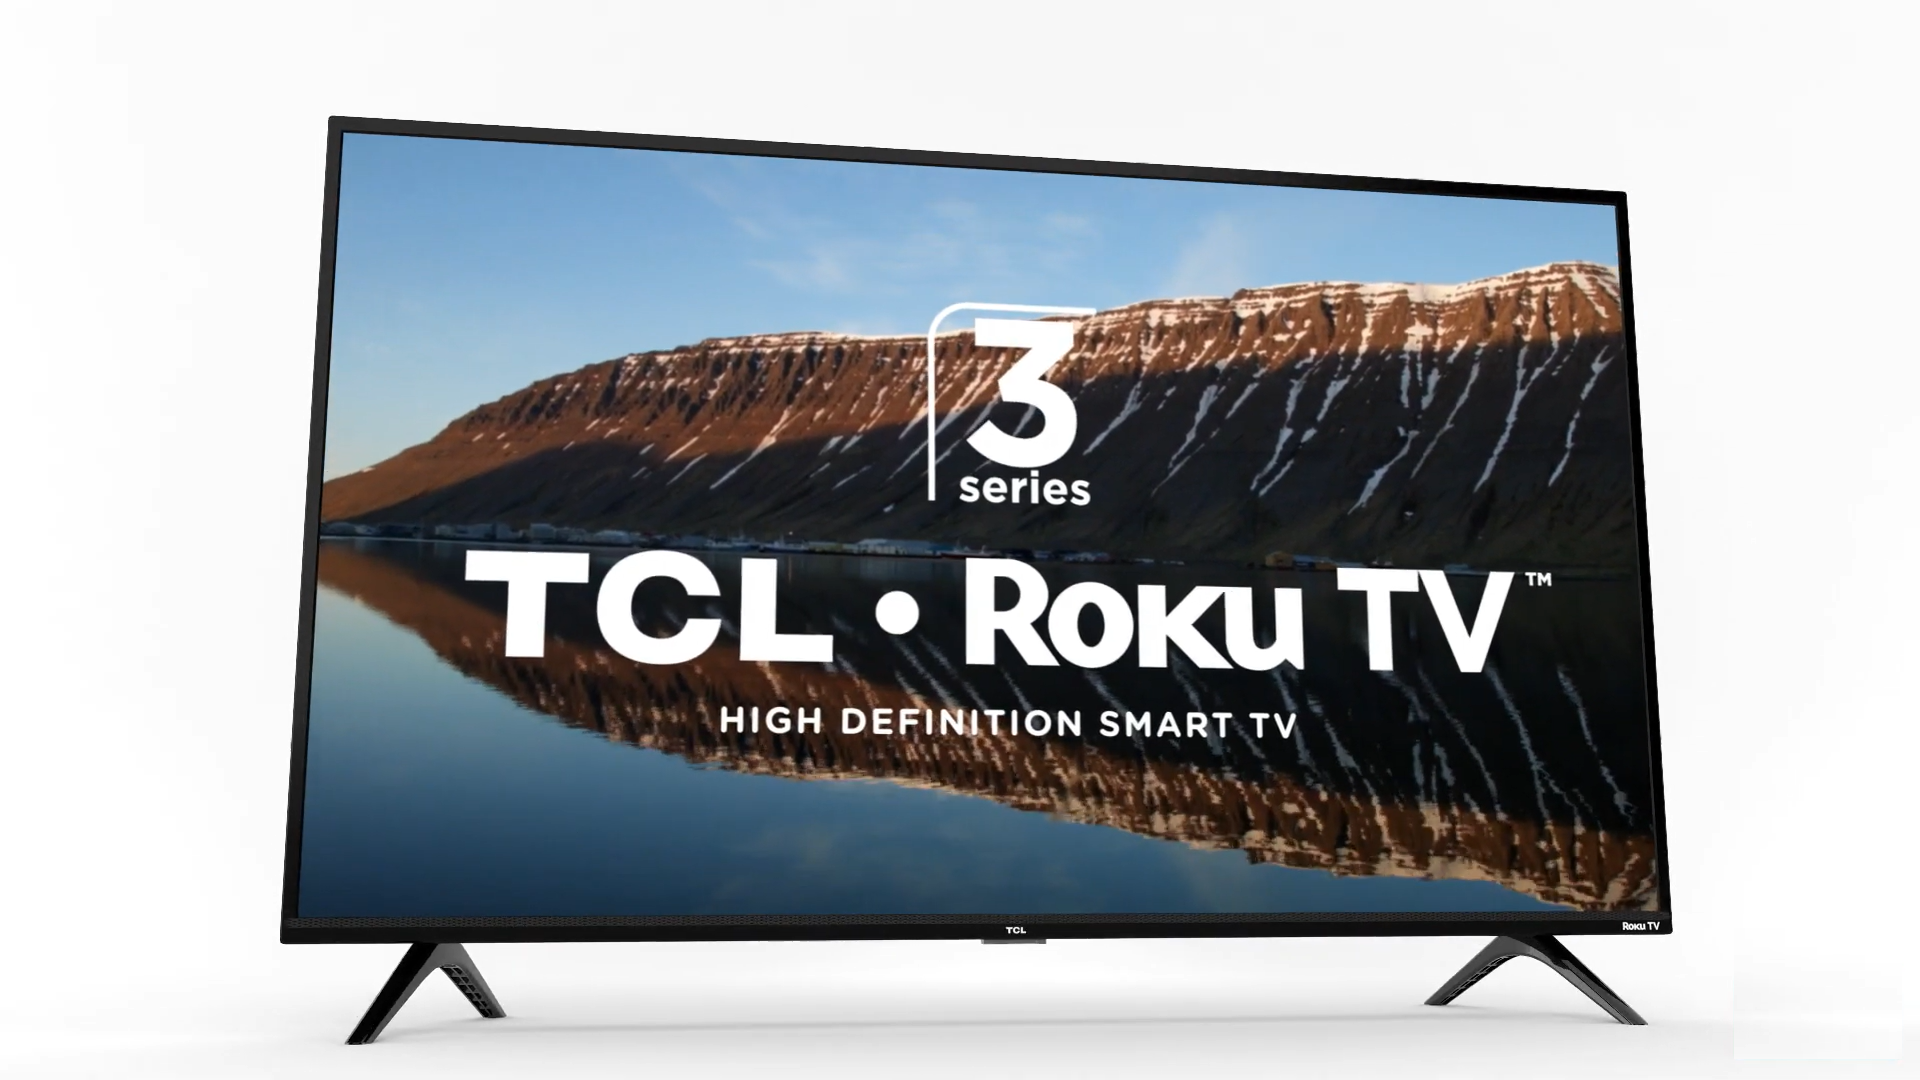 TCL 32 Class 3-Series FHD LED Roku Smart TV - 32S327